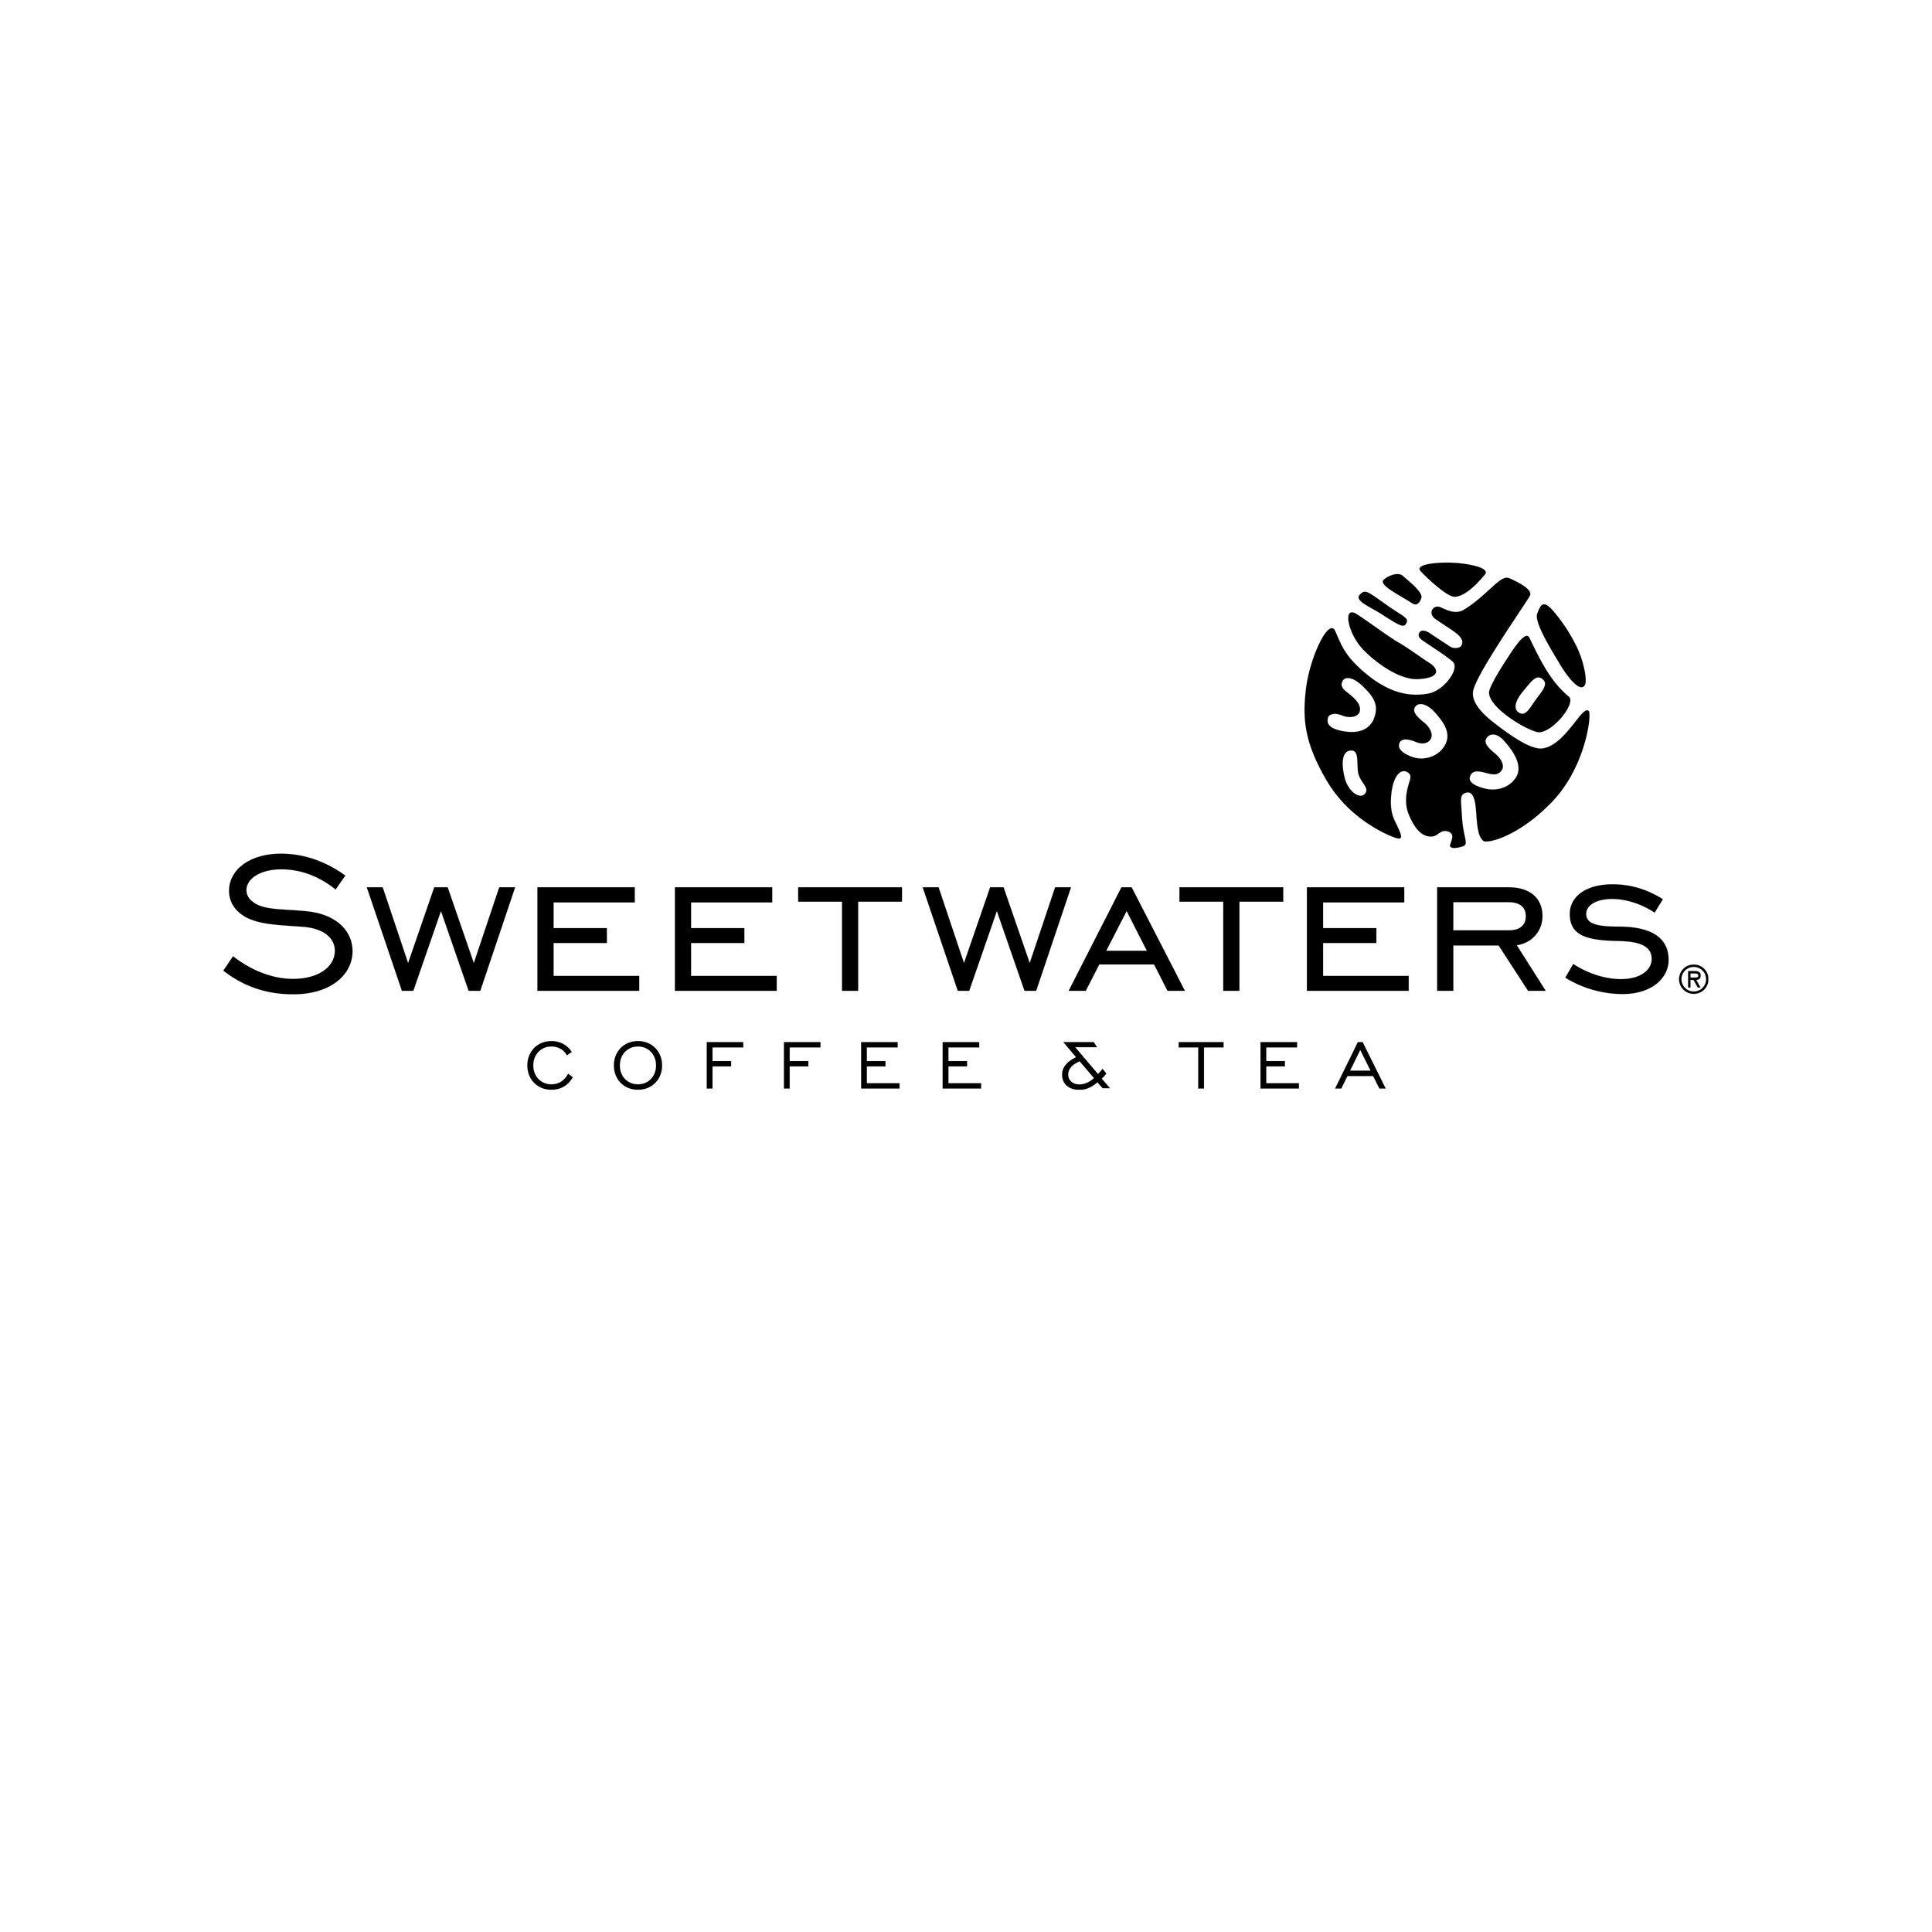 Sweetwaters Logo.jpg